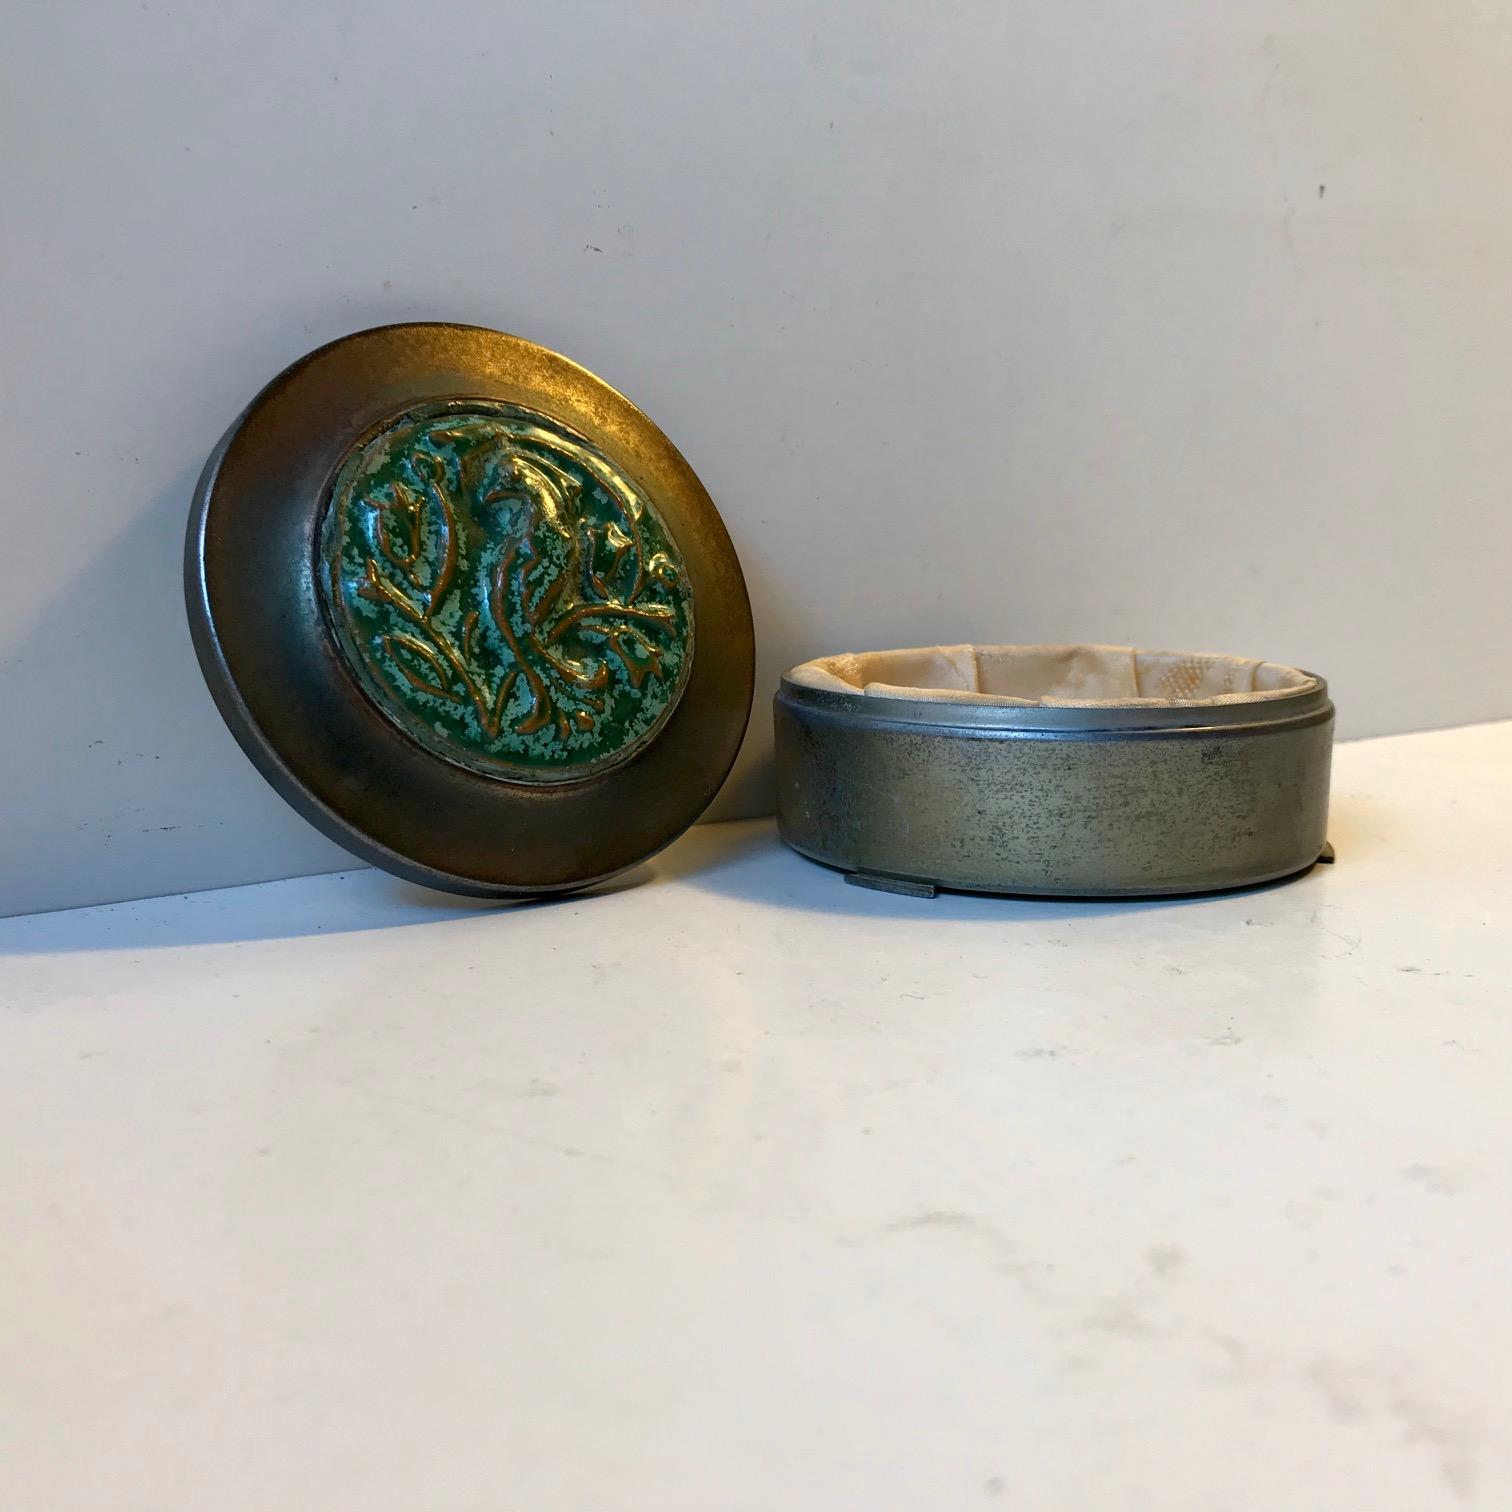 Danish Art Deco Jewelry Trinket in Bronze and Ceramic, BL, 1930s For Sale